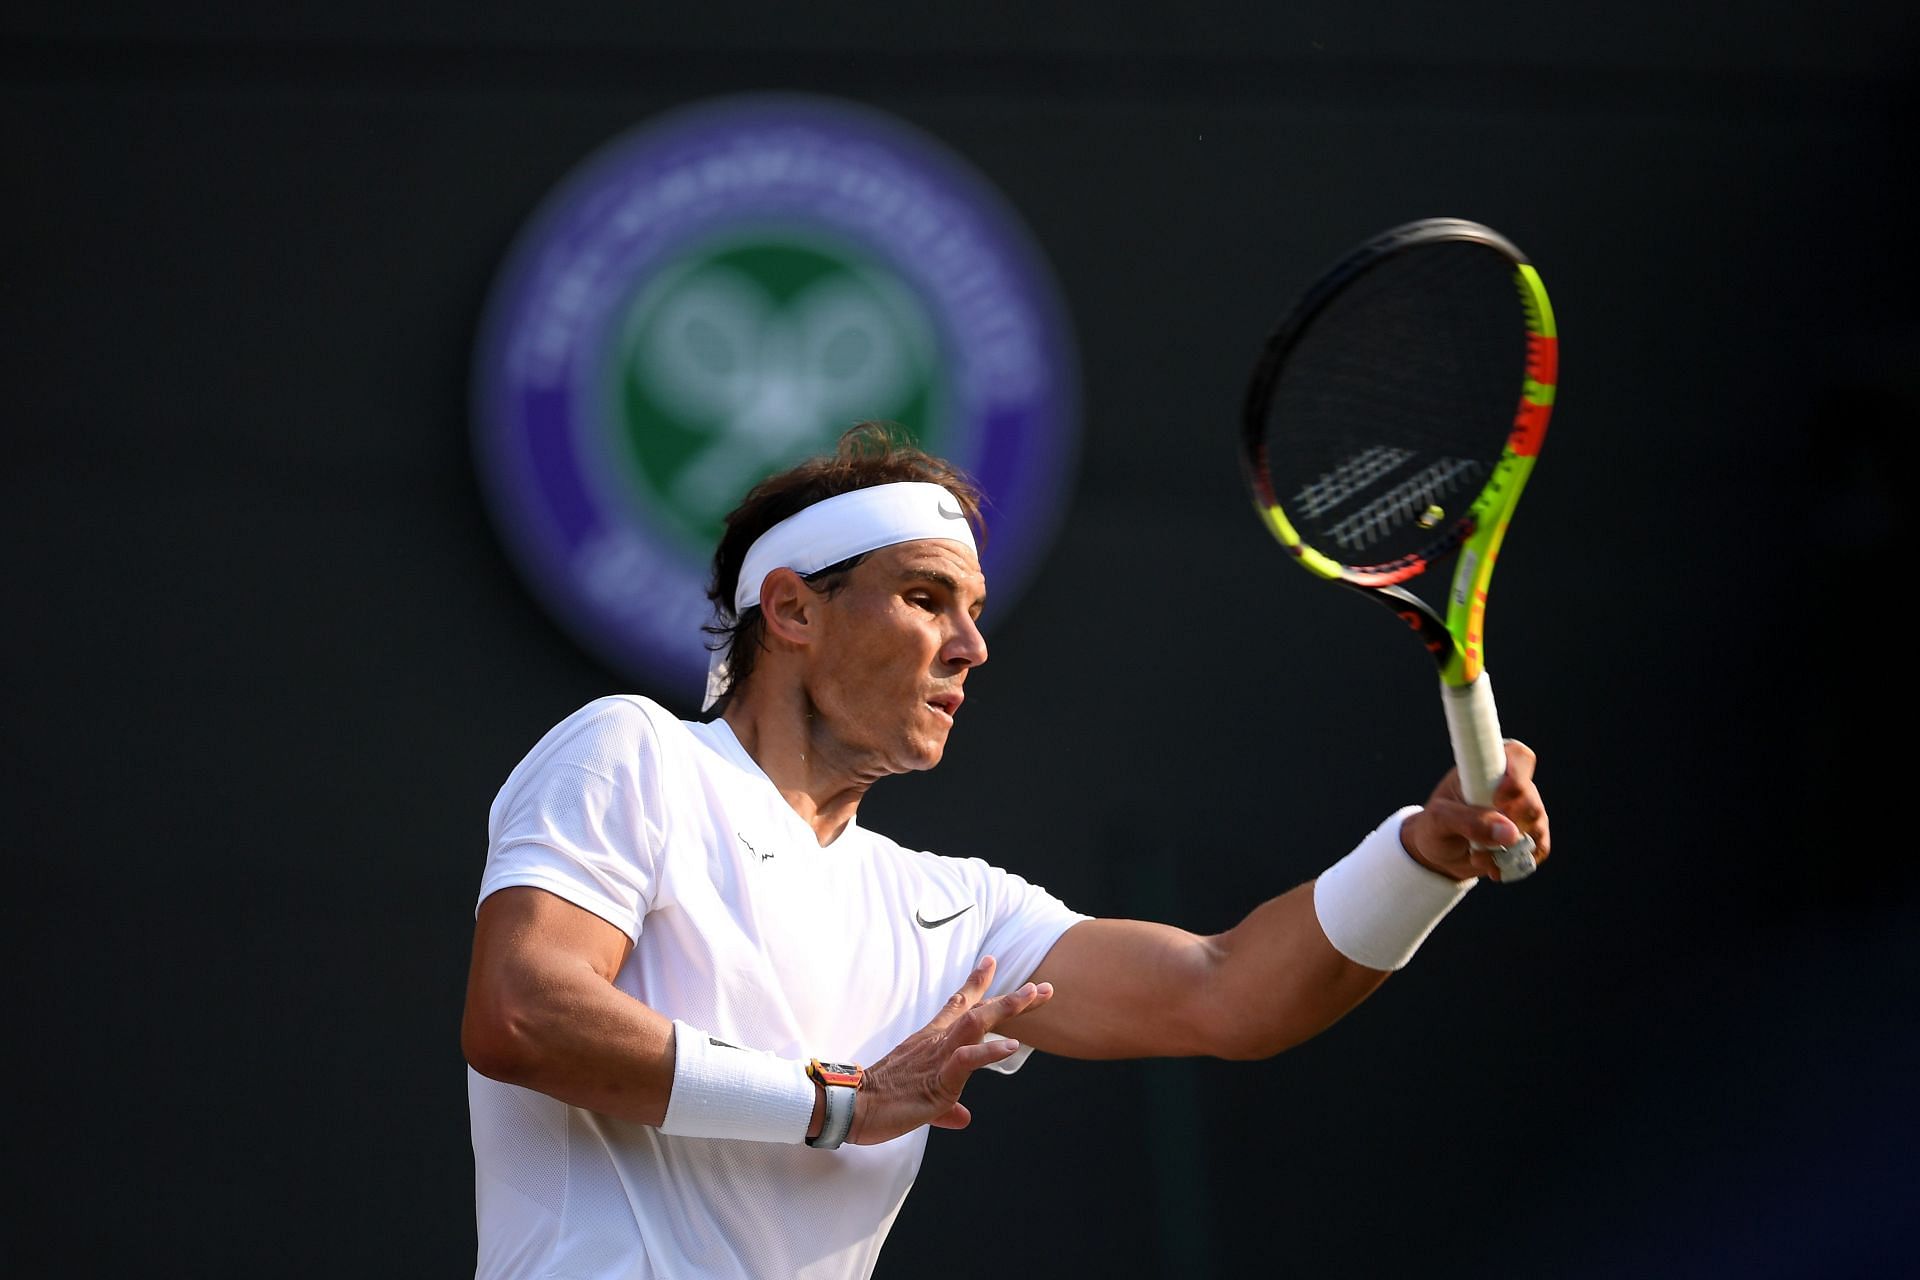 Rafael Nadal has won the Wimbledon championship twice, in 2008 and 2010.